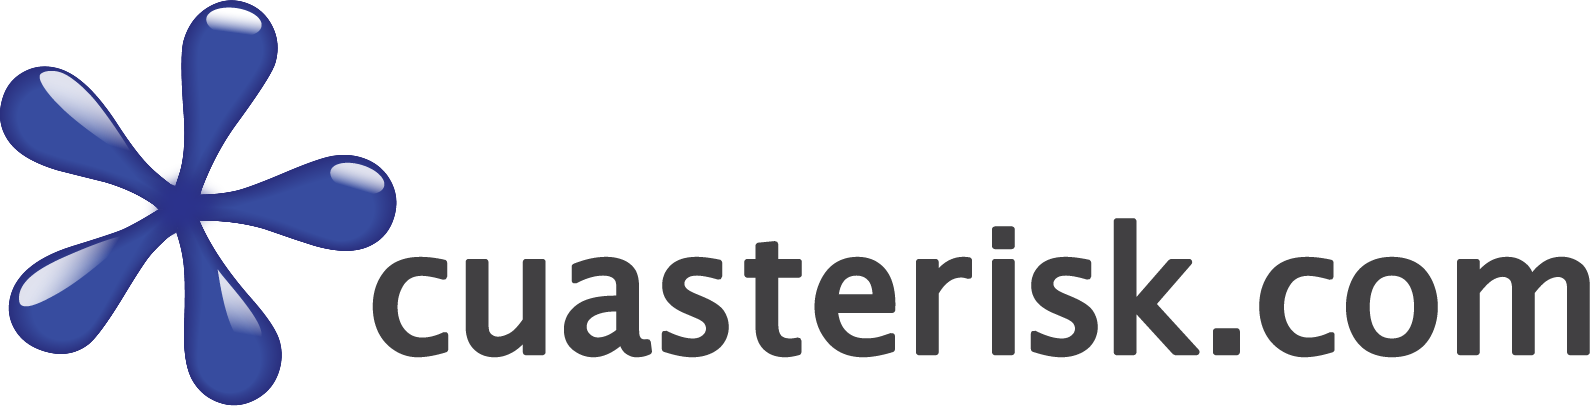 cuasterisk.com